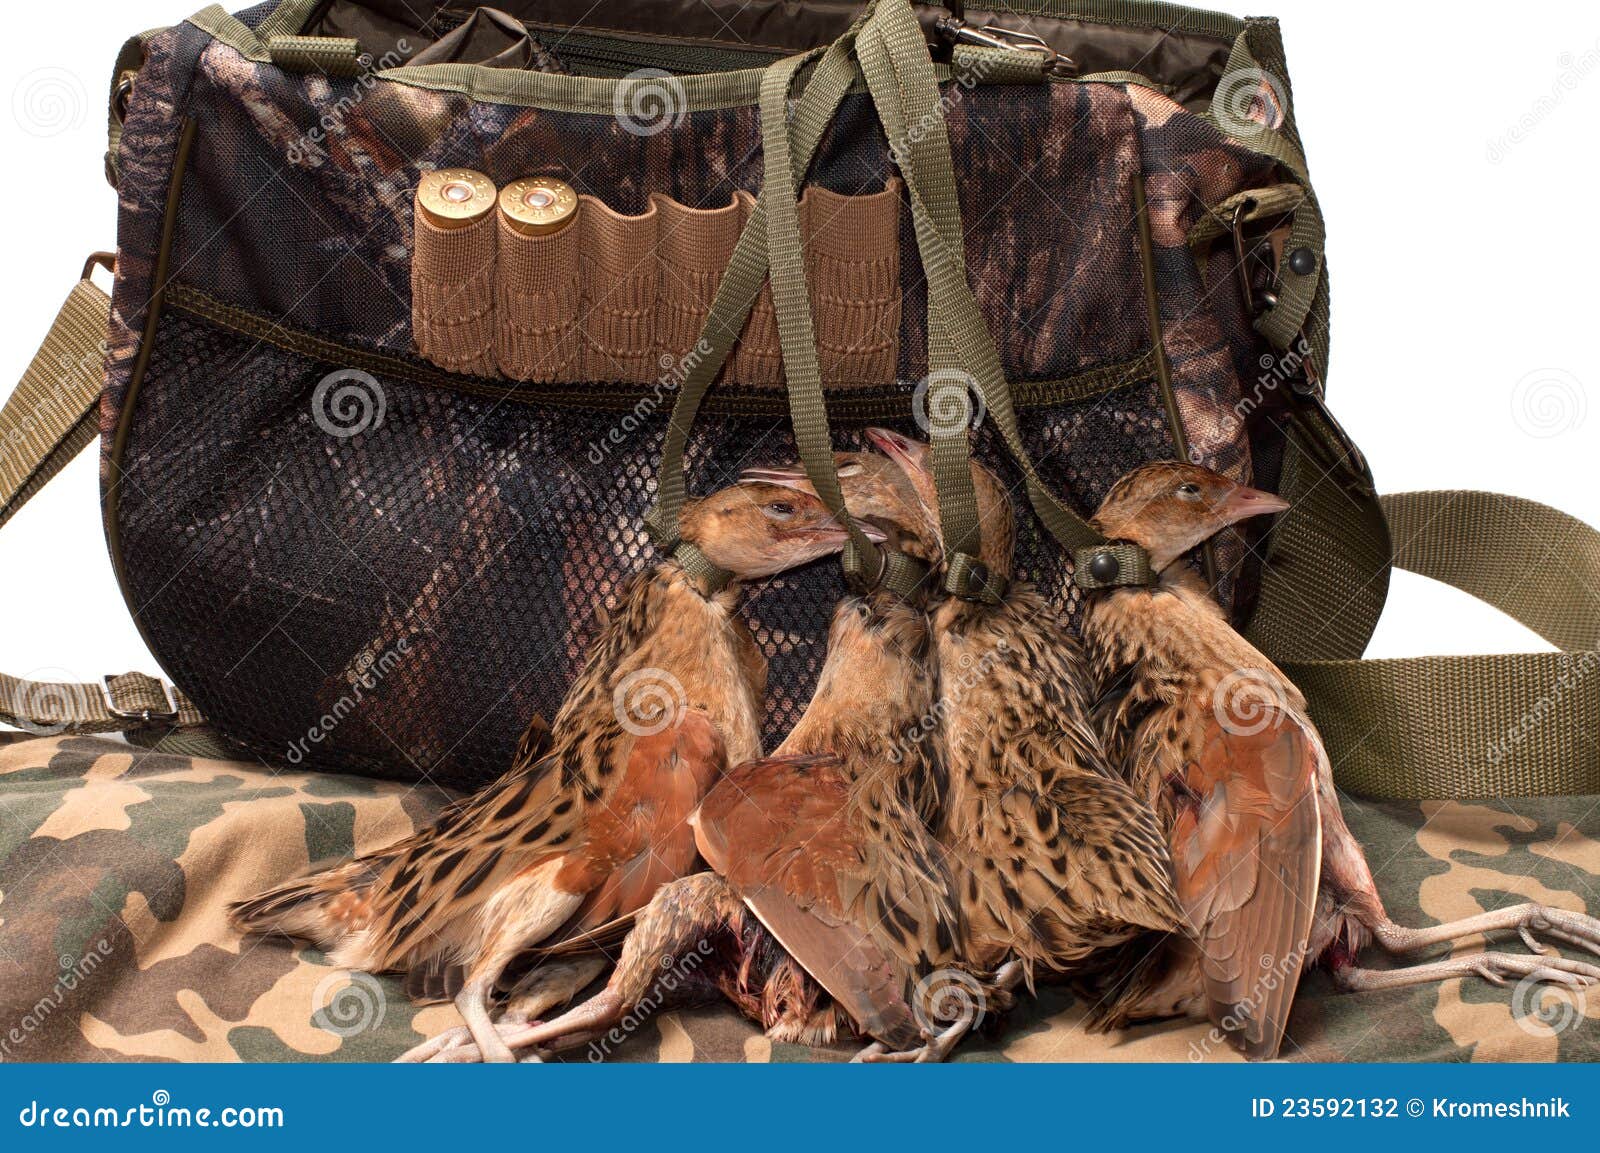 fowling bag and bird.